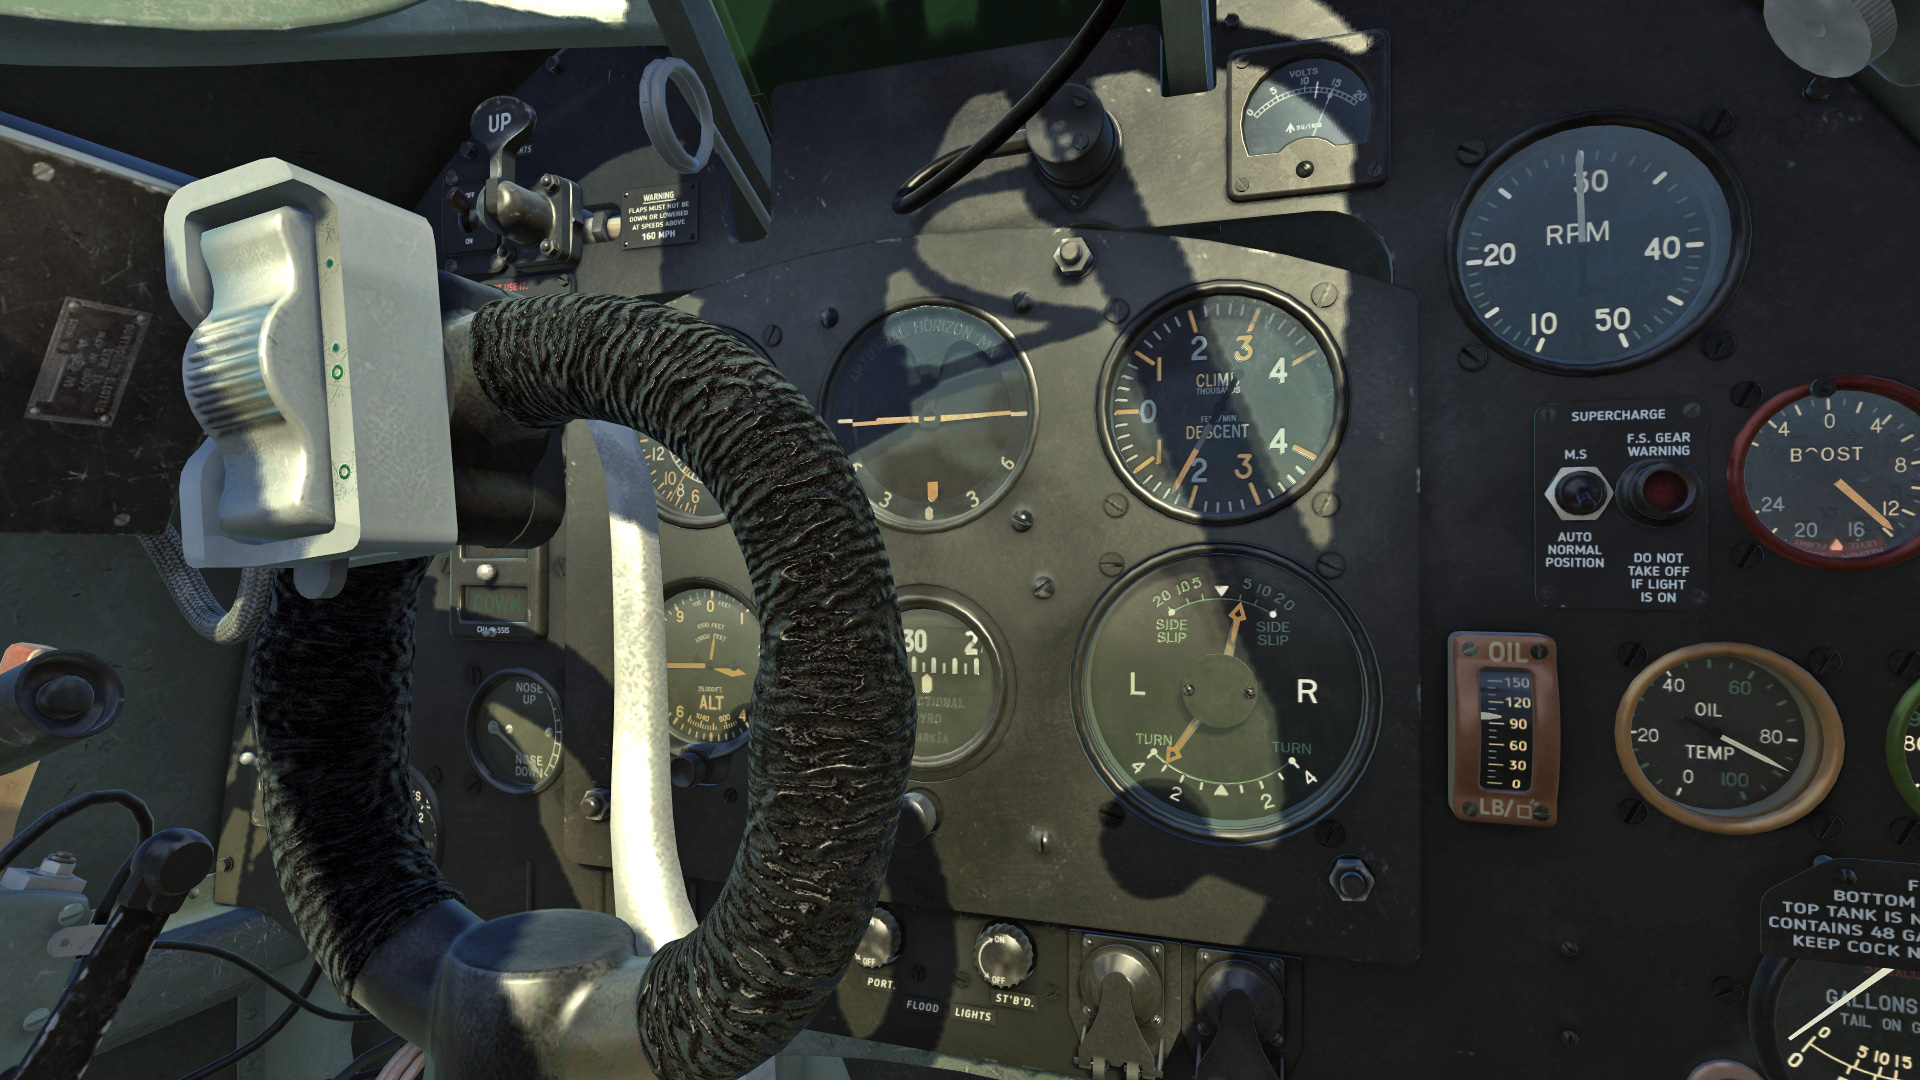 DCS: Spitfire LF Mk IX screenshot